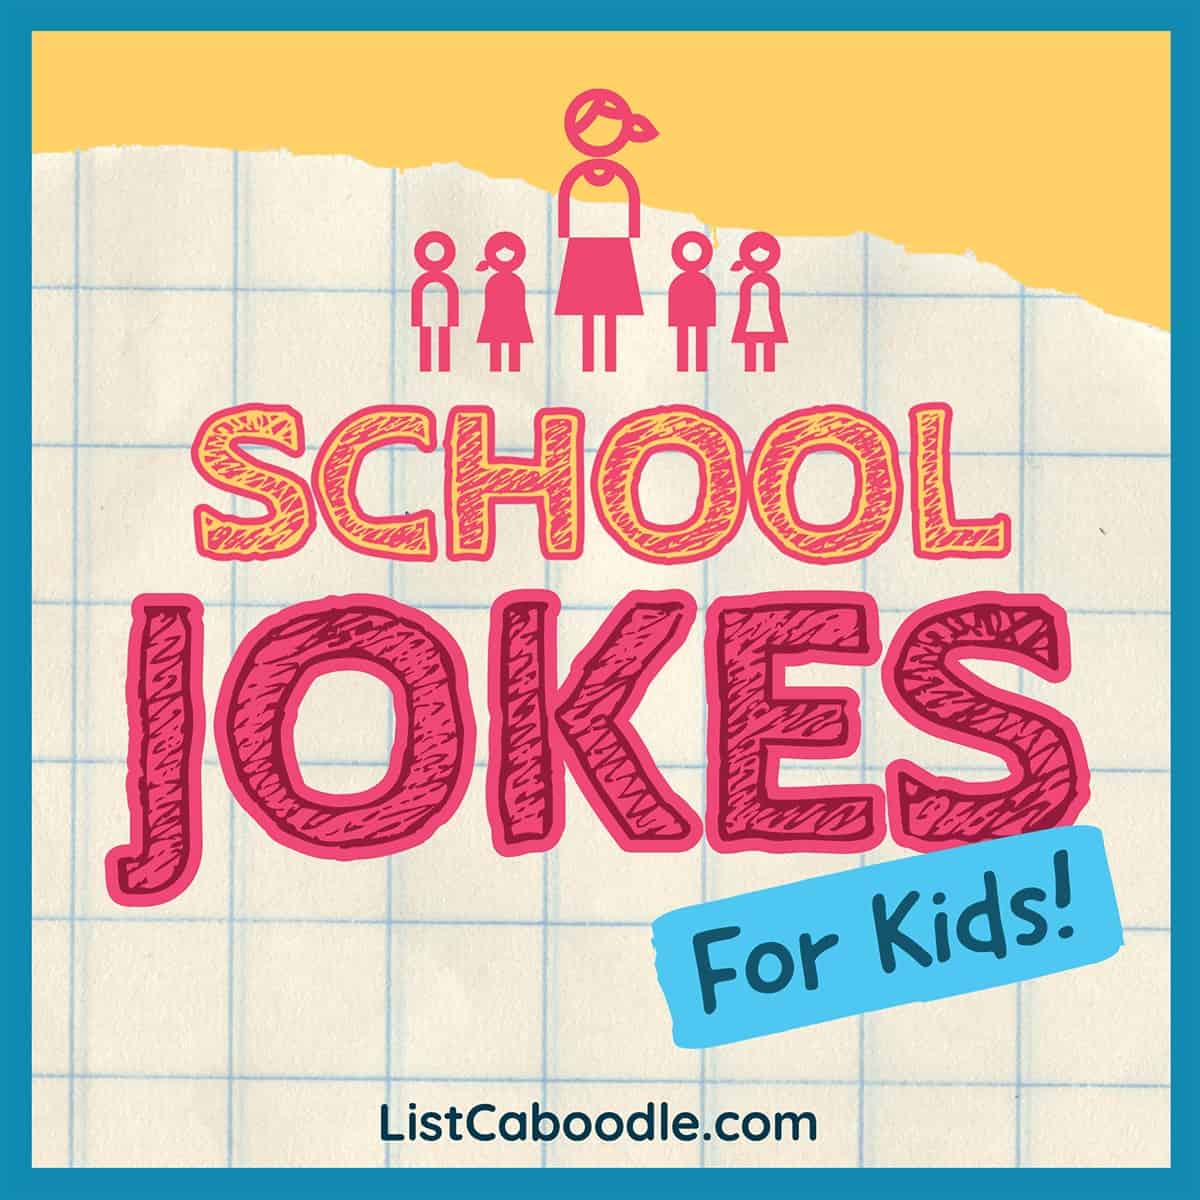 School jokes for kids